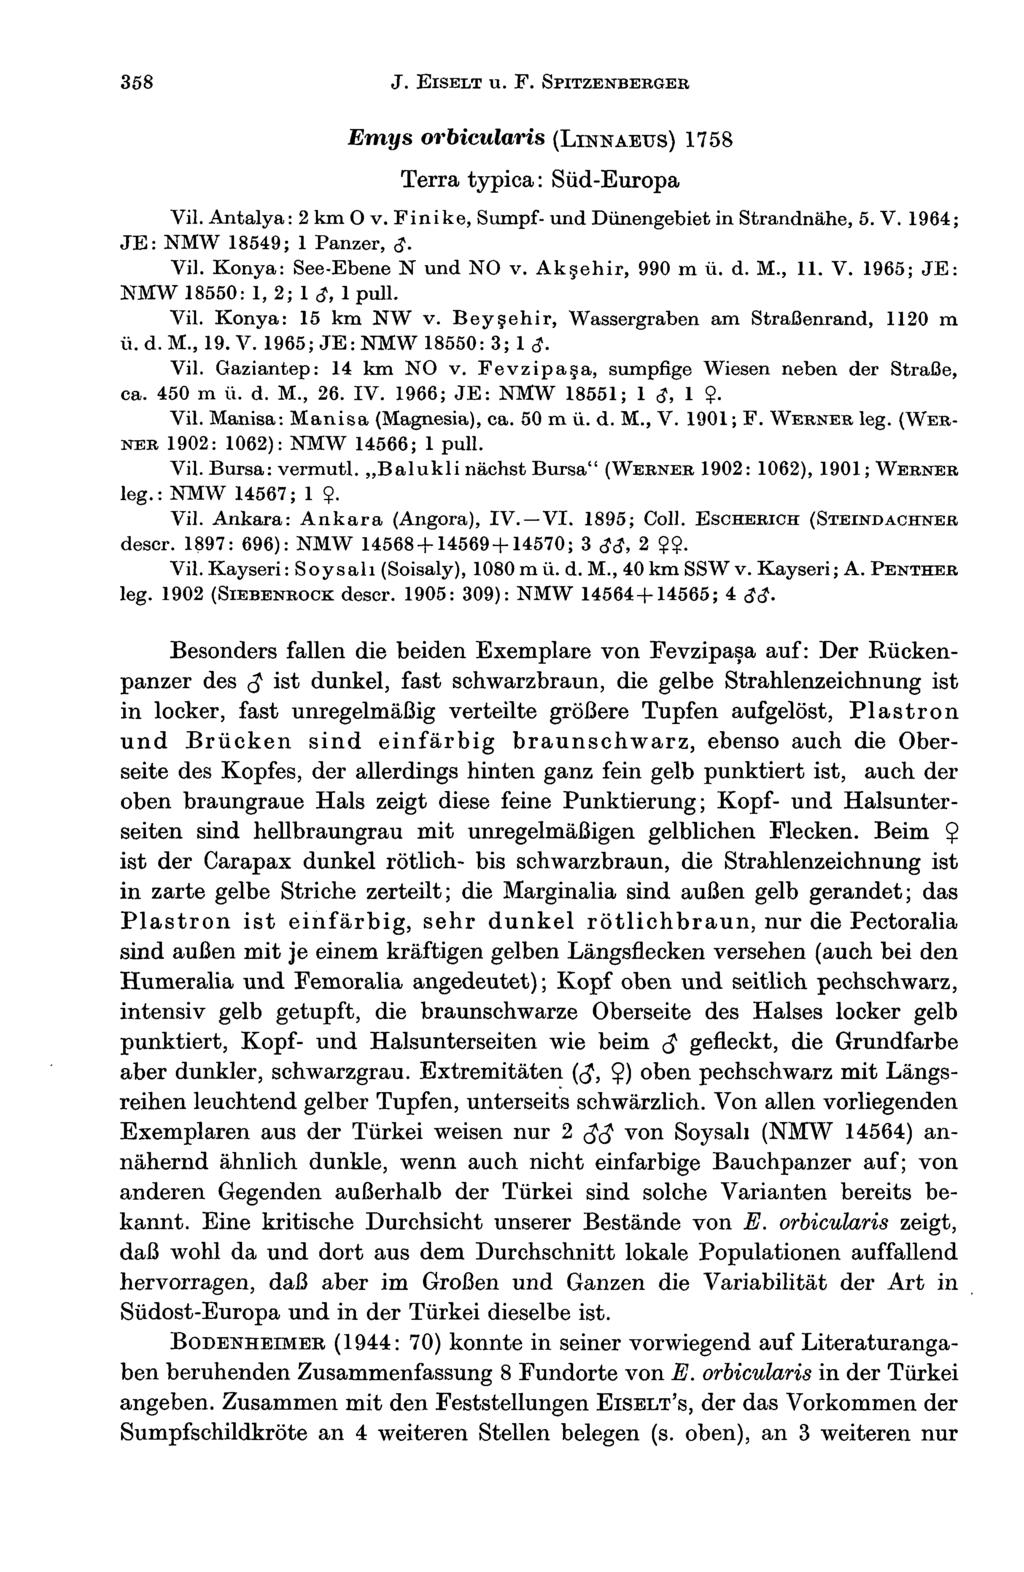 358 J. EISELT U. F. SPITZENBERGER Emys orbicularis (LINNAEUS) 1758 Terra typica : Süd-Europa Vil. Antalya: 2 km 0 v. Finike, Sumpf- und Dünengebiet in Strandnähe, 5. V. 1964; JE: NMW 18549; 1 Panzer, <?